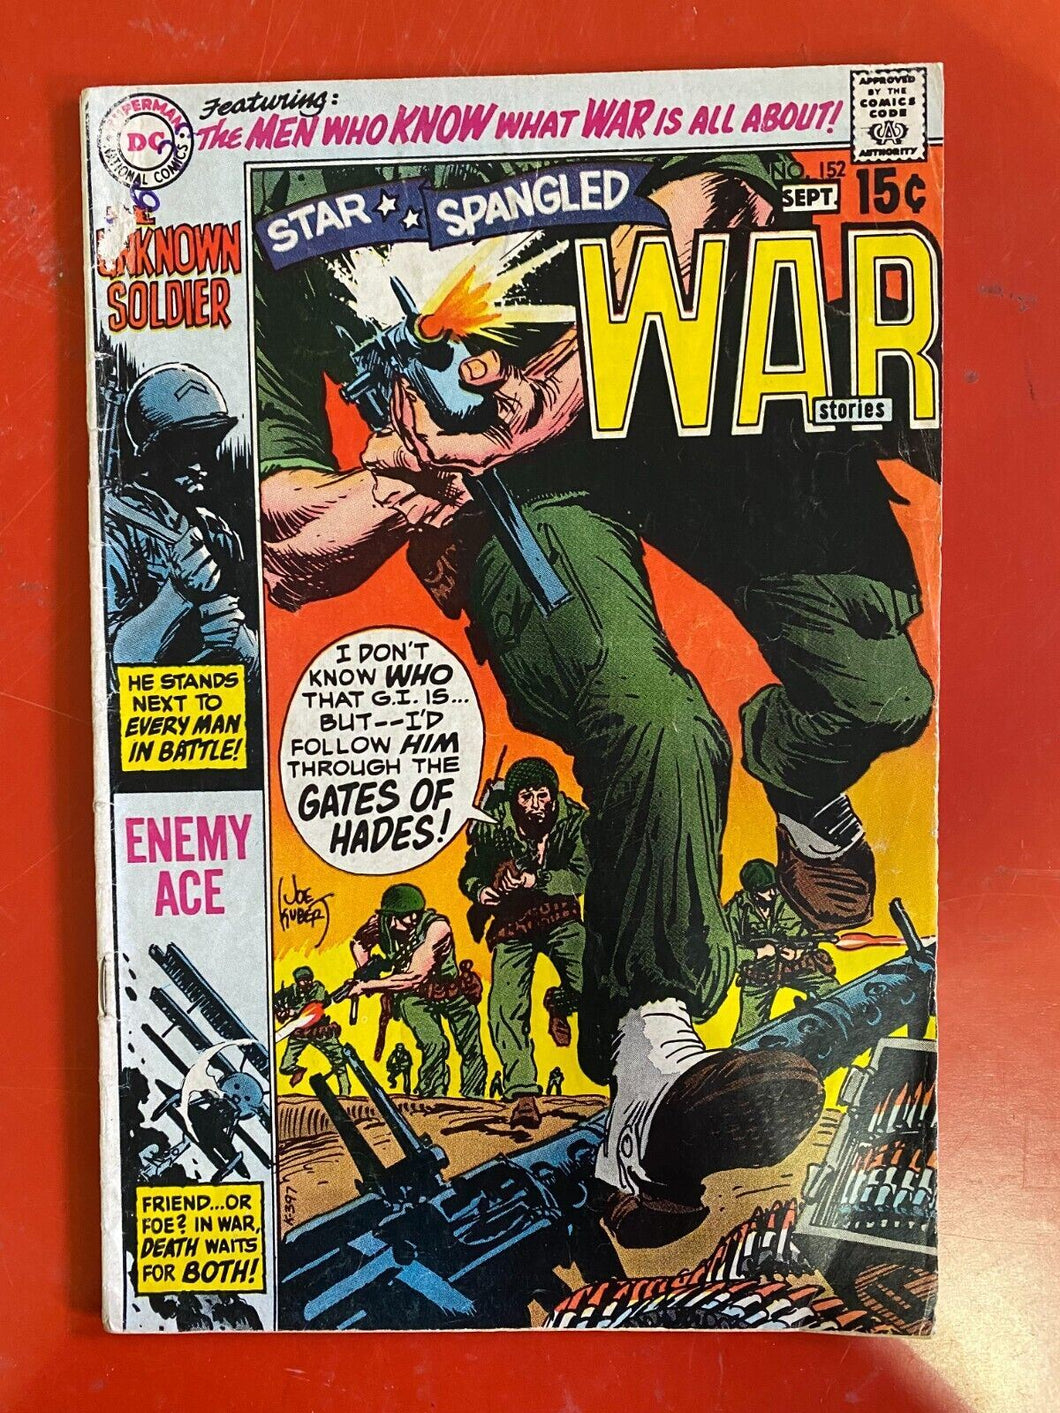 1970 DC Comics Star Spangled War Stories Issue 152